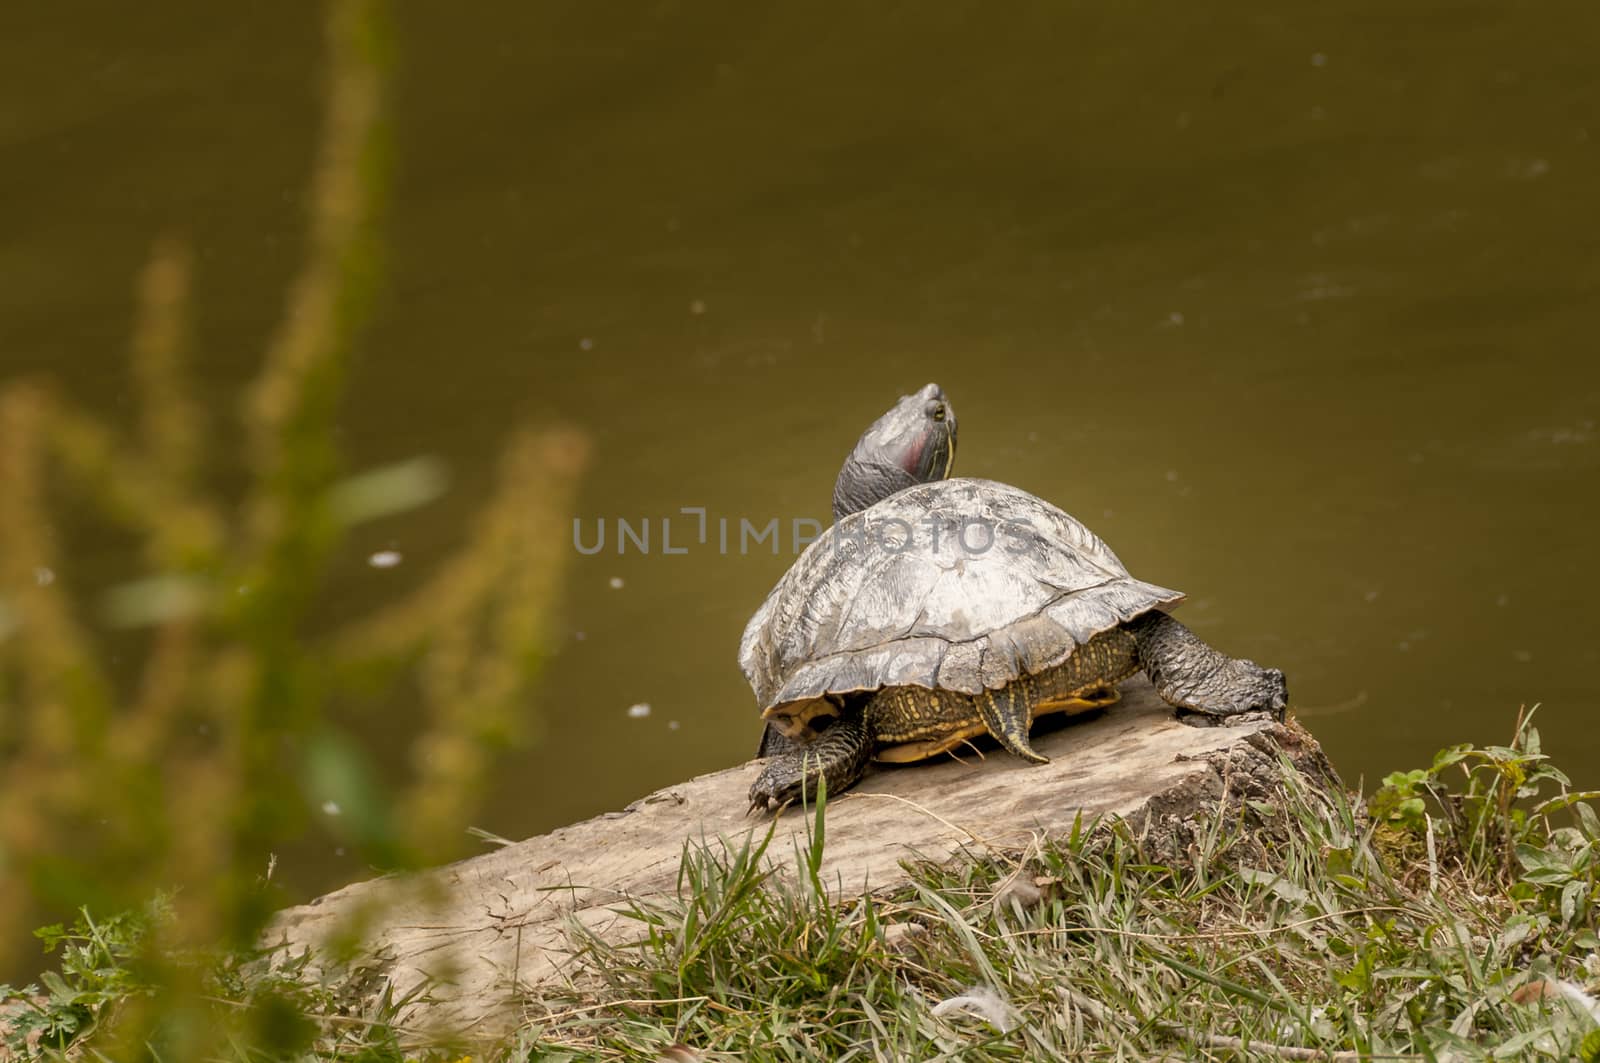 Turtle bathing in sun by asafaric